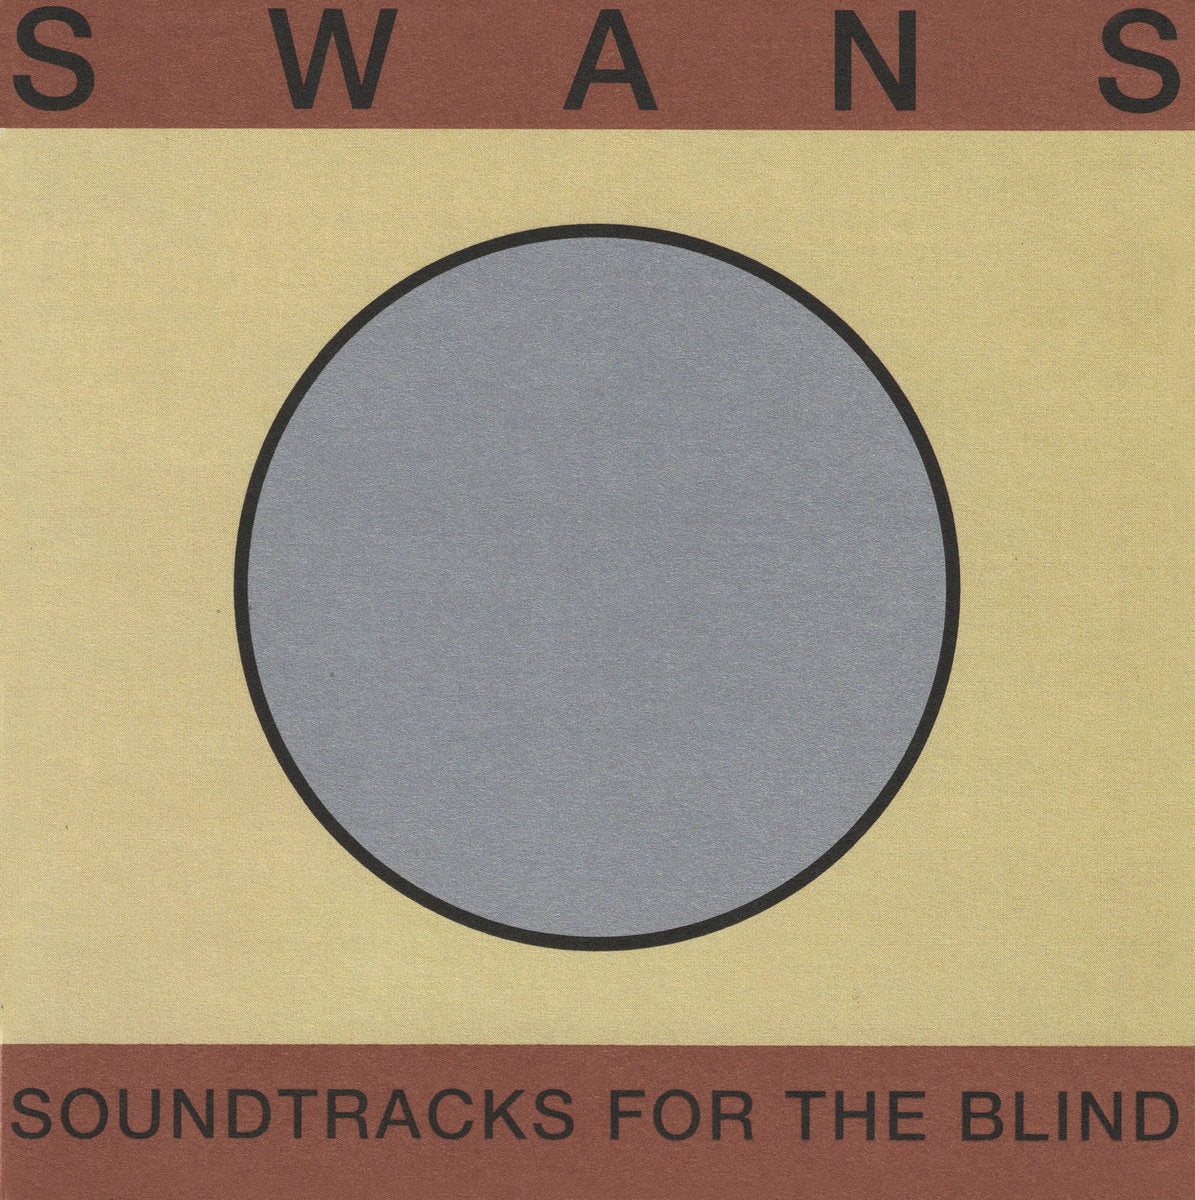 SWANS "Soundtracks For The Blind" 4xLP